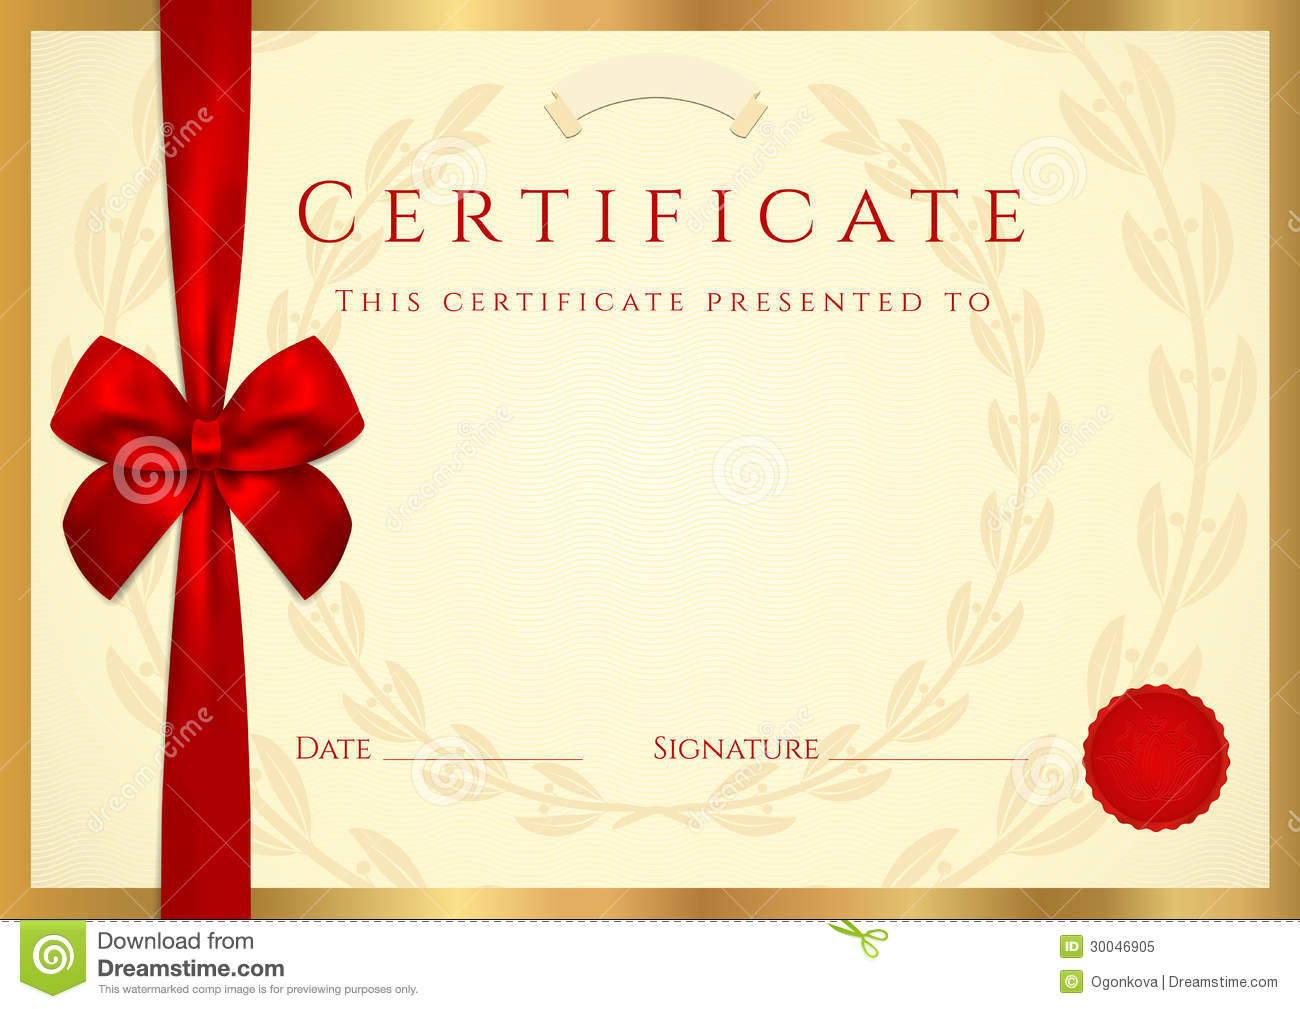 congratulation certificate template word - Beyti In Felicitation Certificate Template